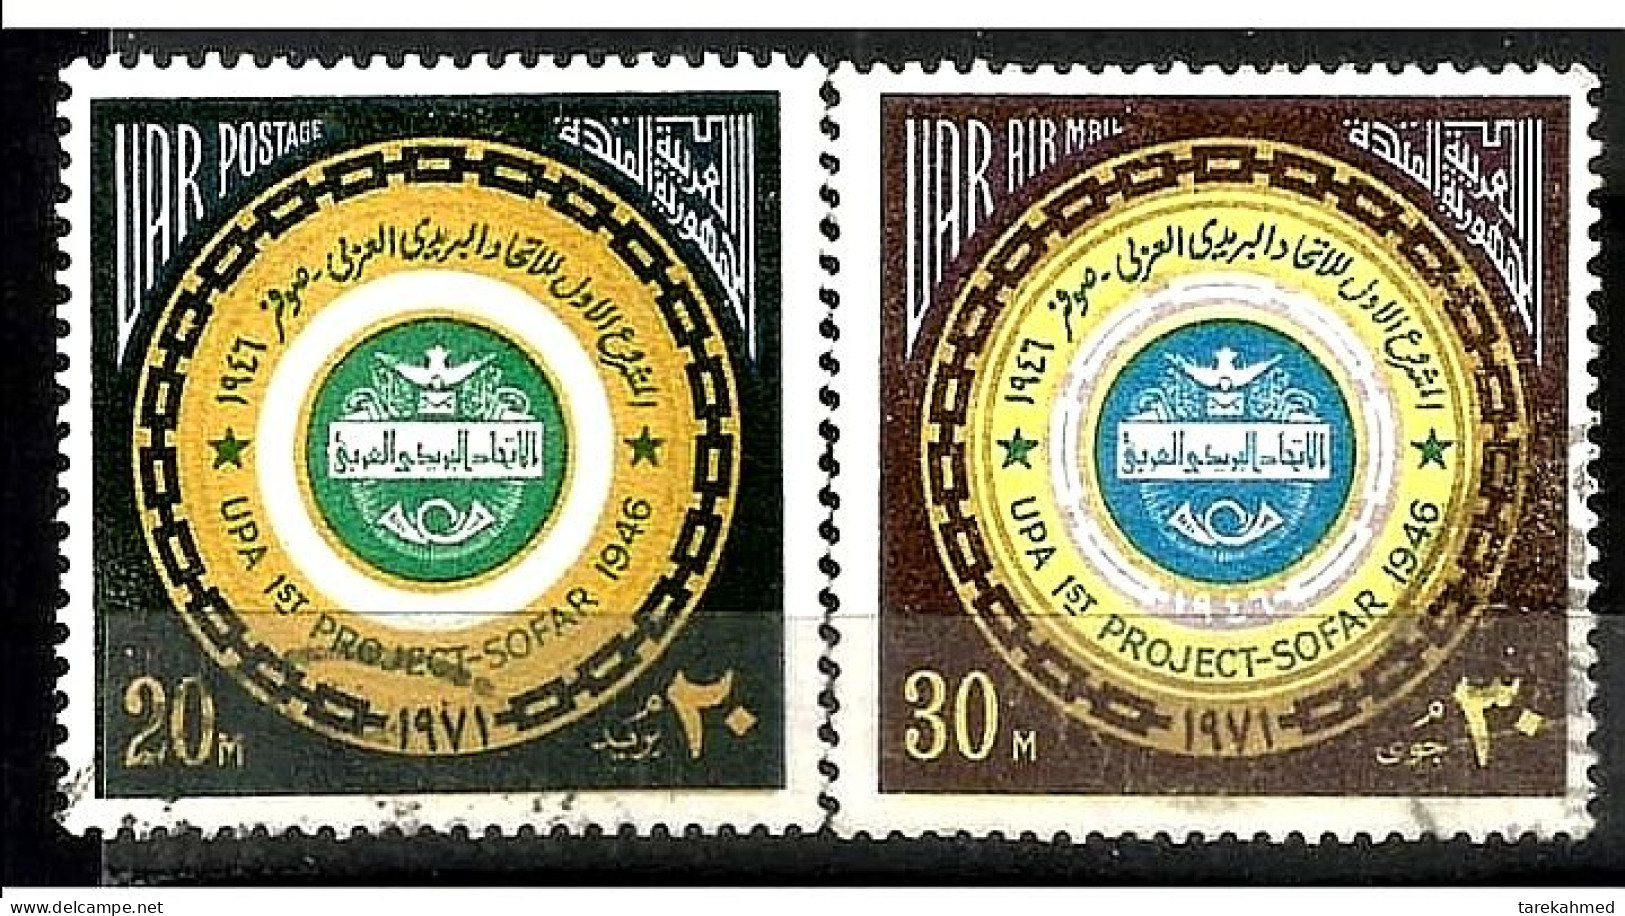 EGYPT 1971, Complete SET Of The CONFERENCE OF SOFAR, LEBANON ESTABILISHING THE APU, VF' - Gebraucht